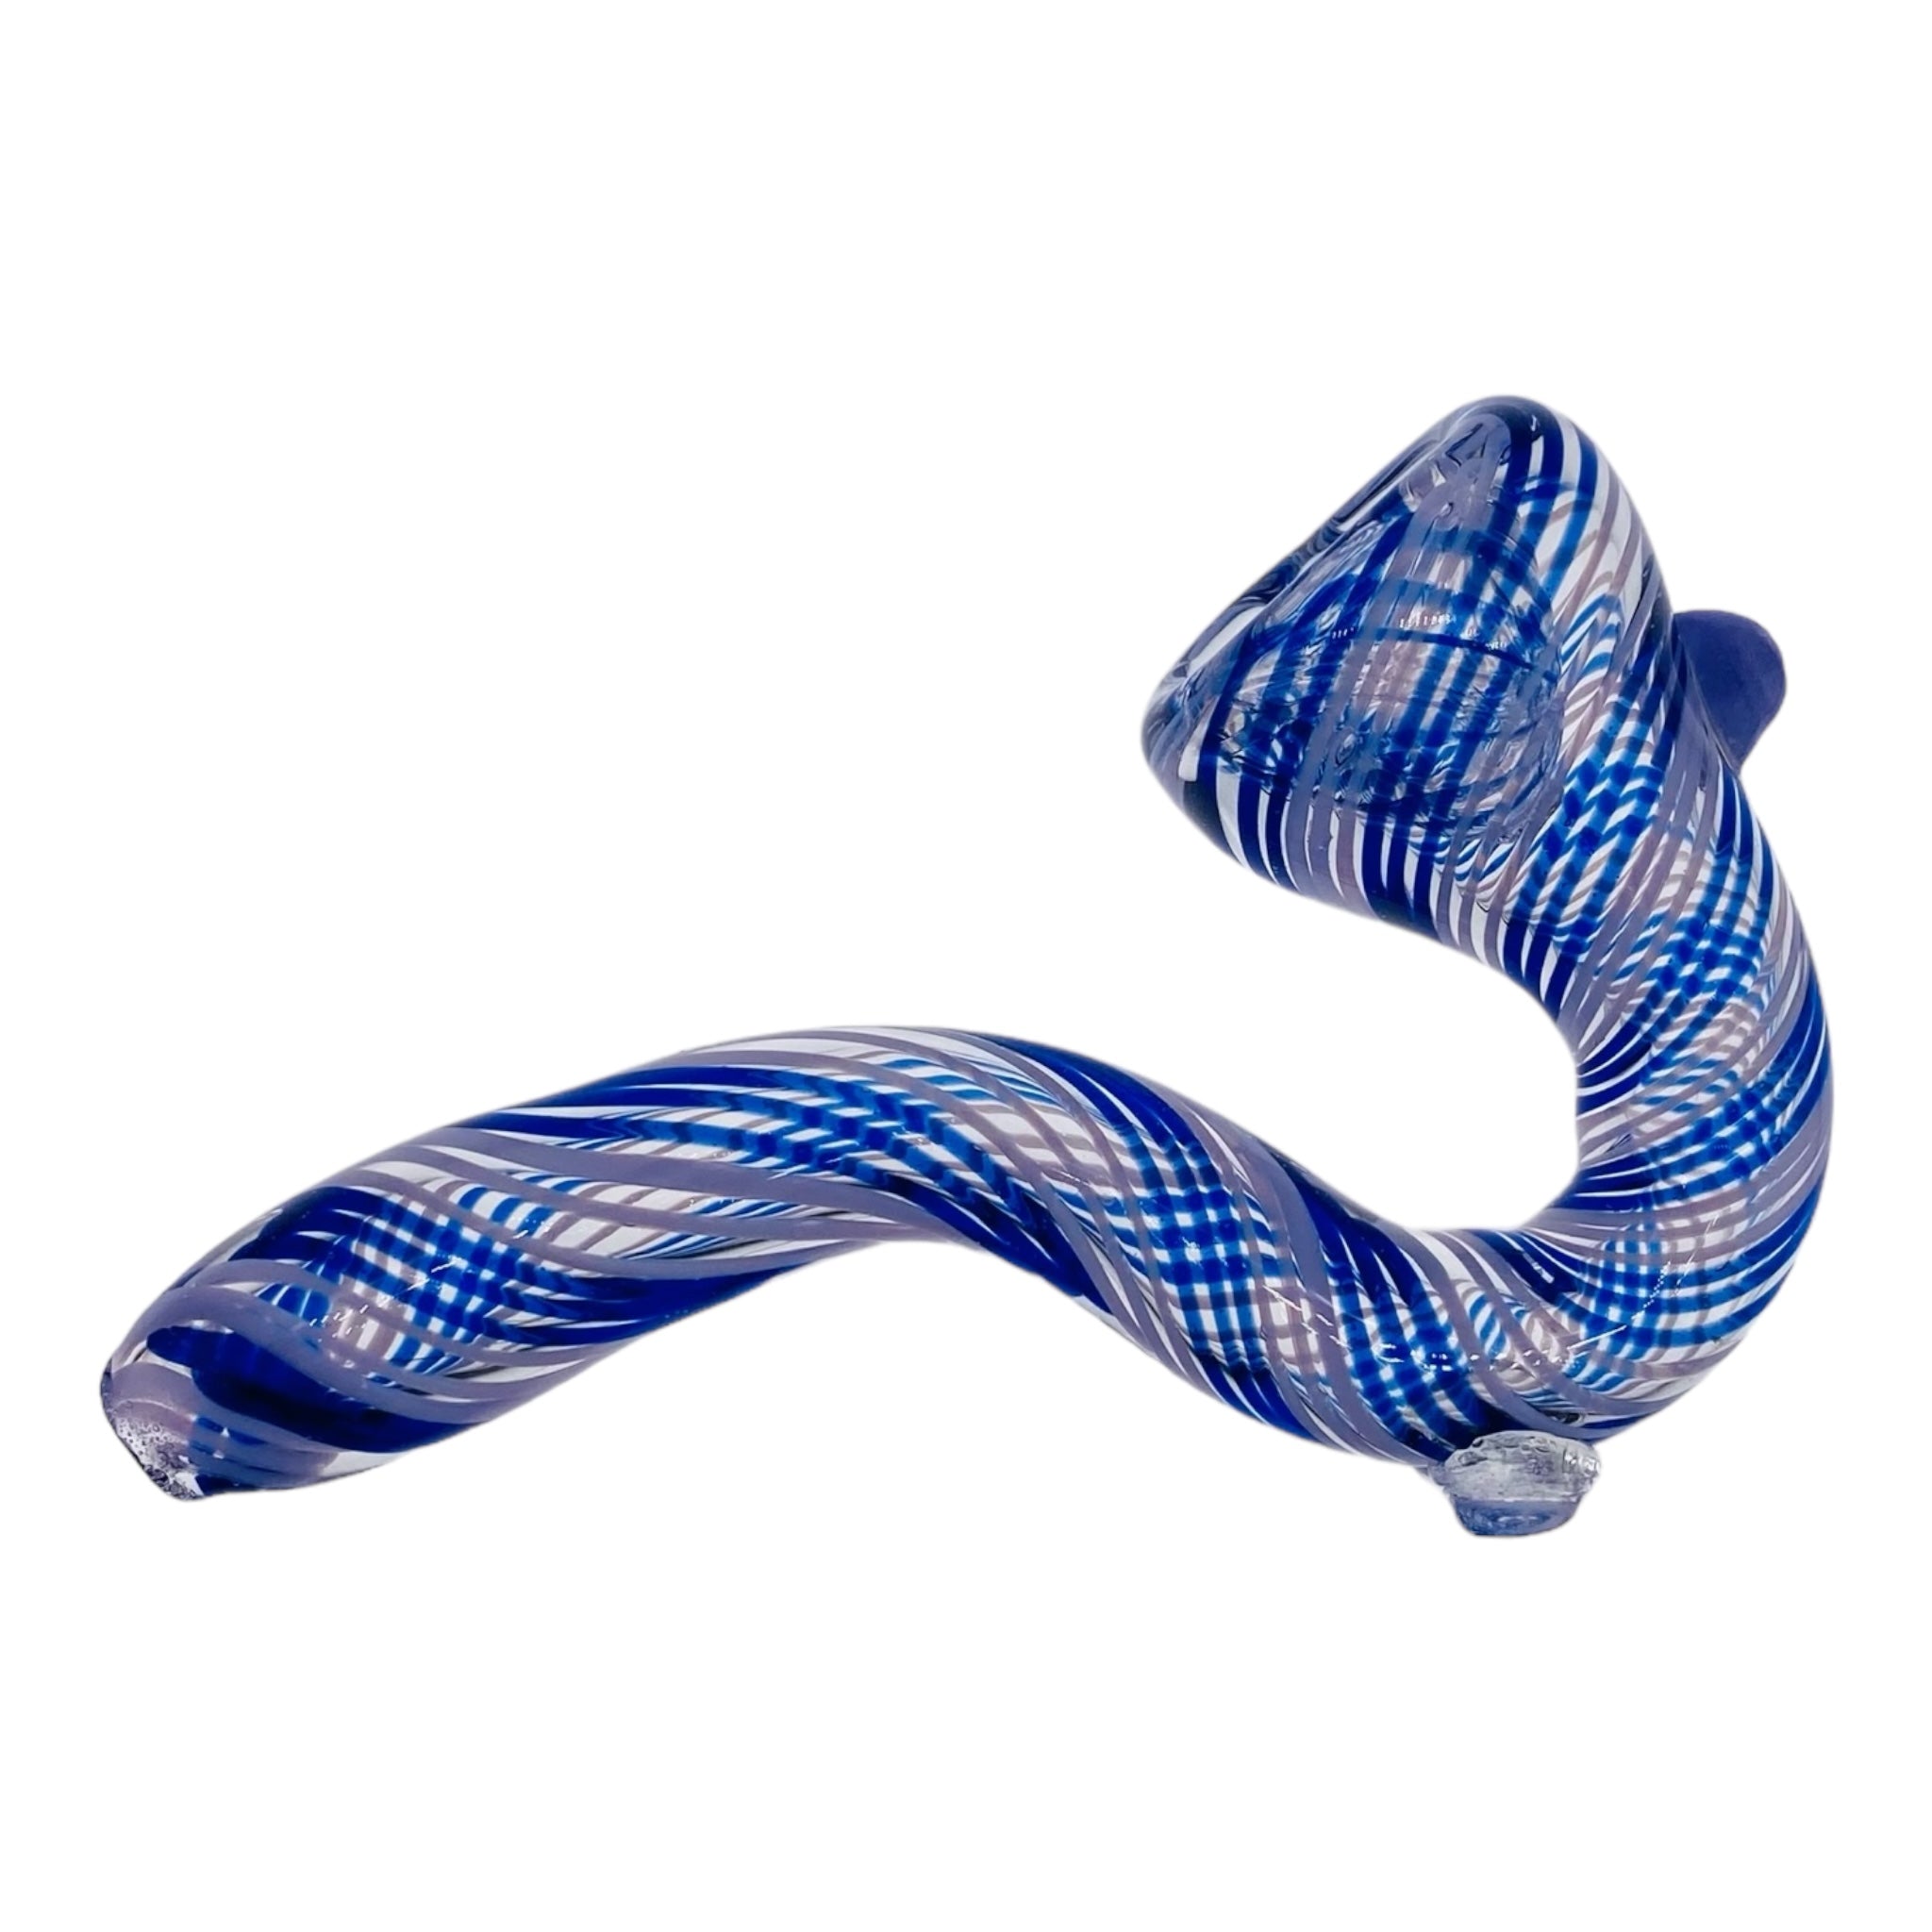 cheap heady custom Blue and White Linework Twist Sherlock holme Glass smoking Hand Pipe